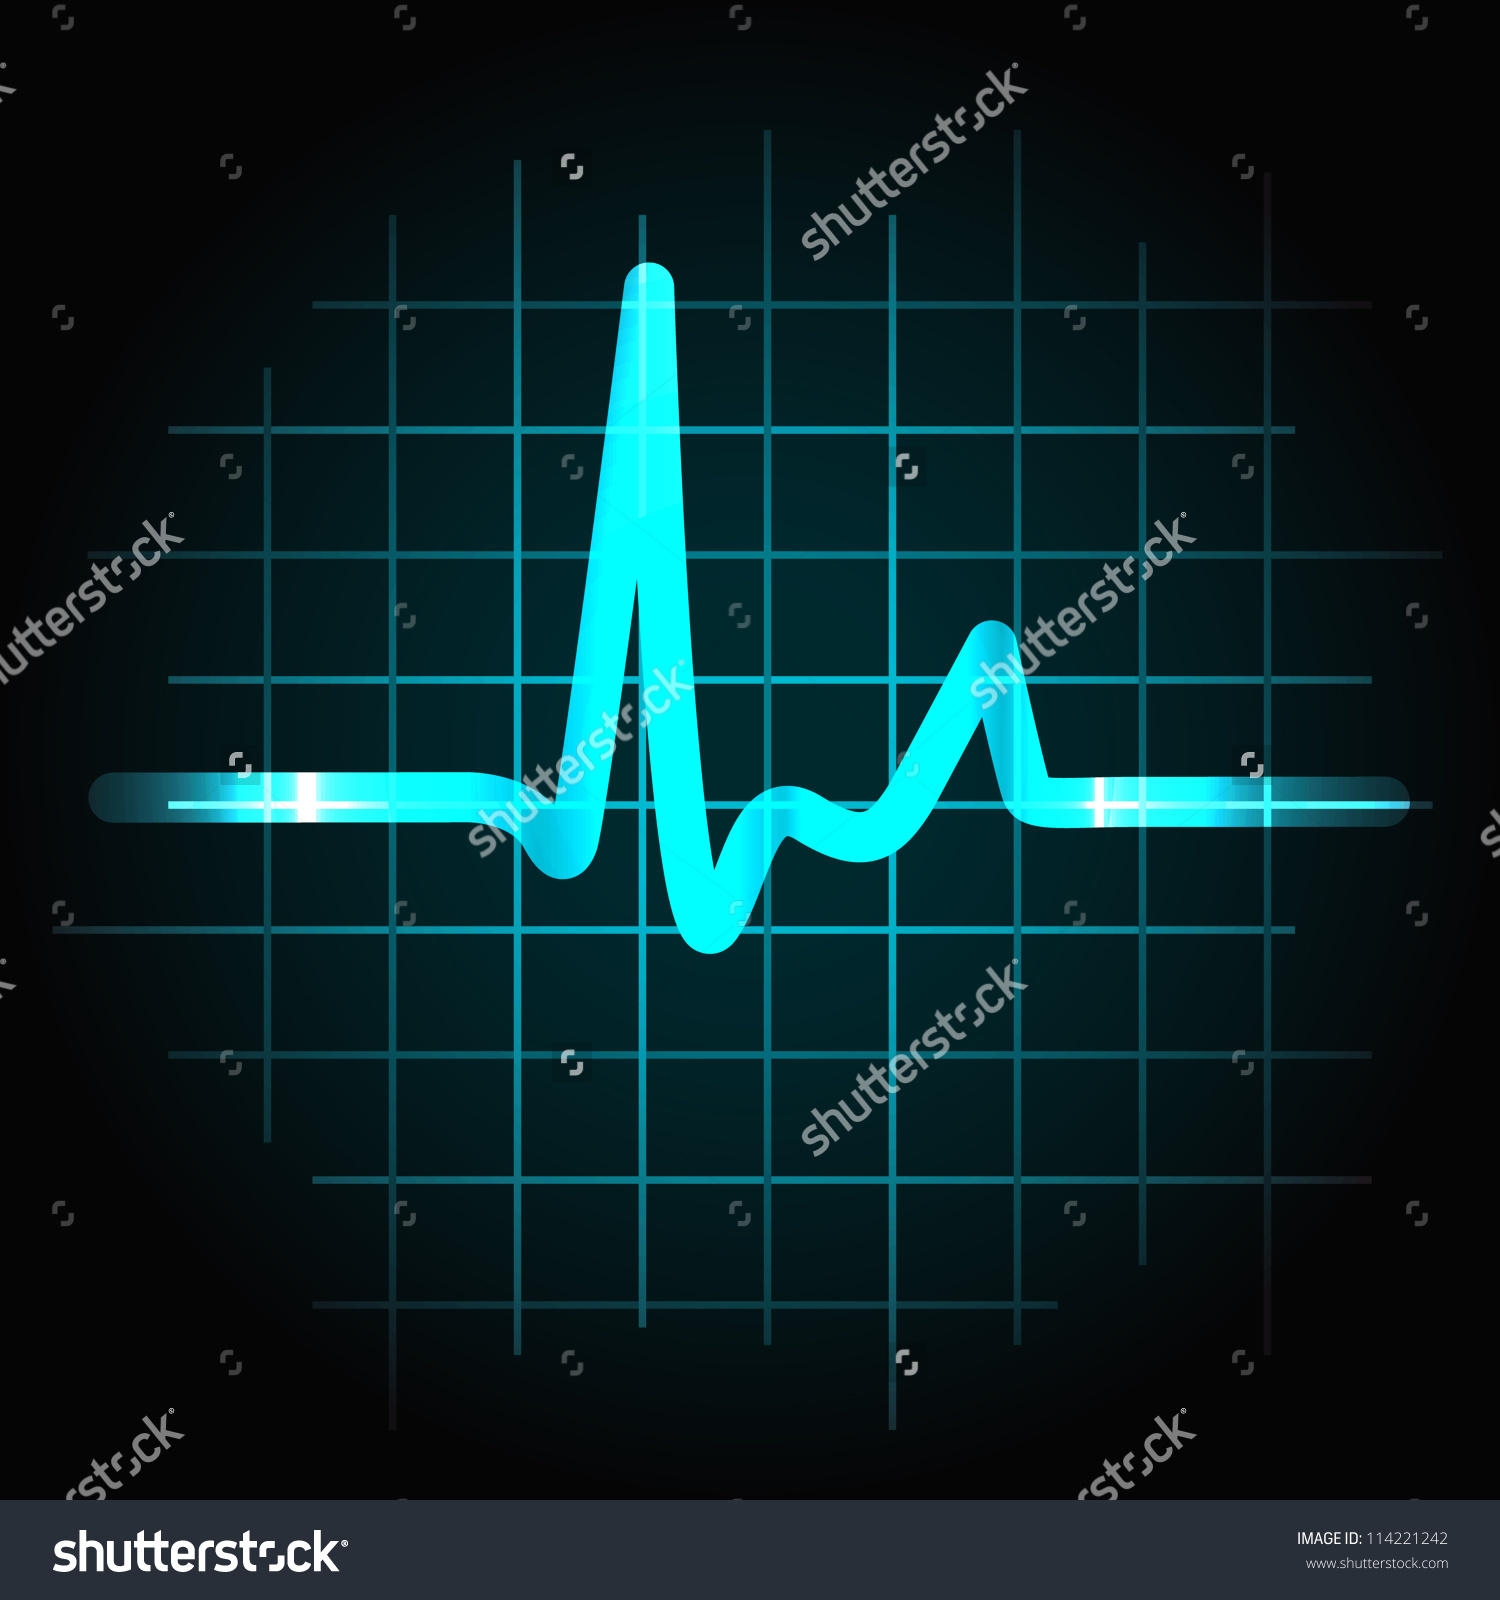 Heartbeat Wave HD wallpapers, Desktop wallpaper - most viewed